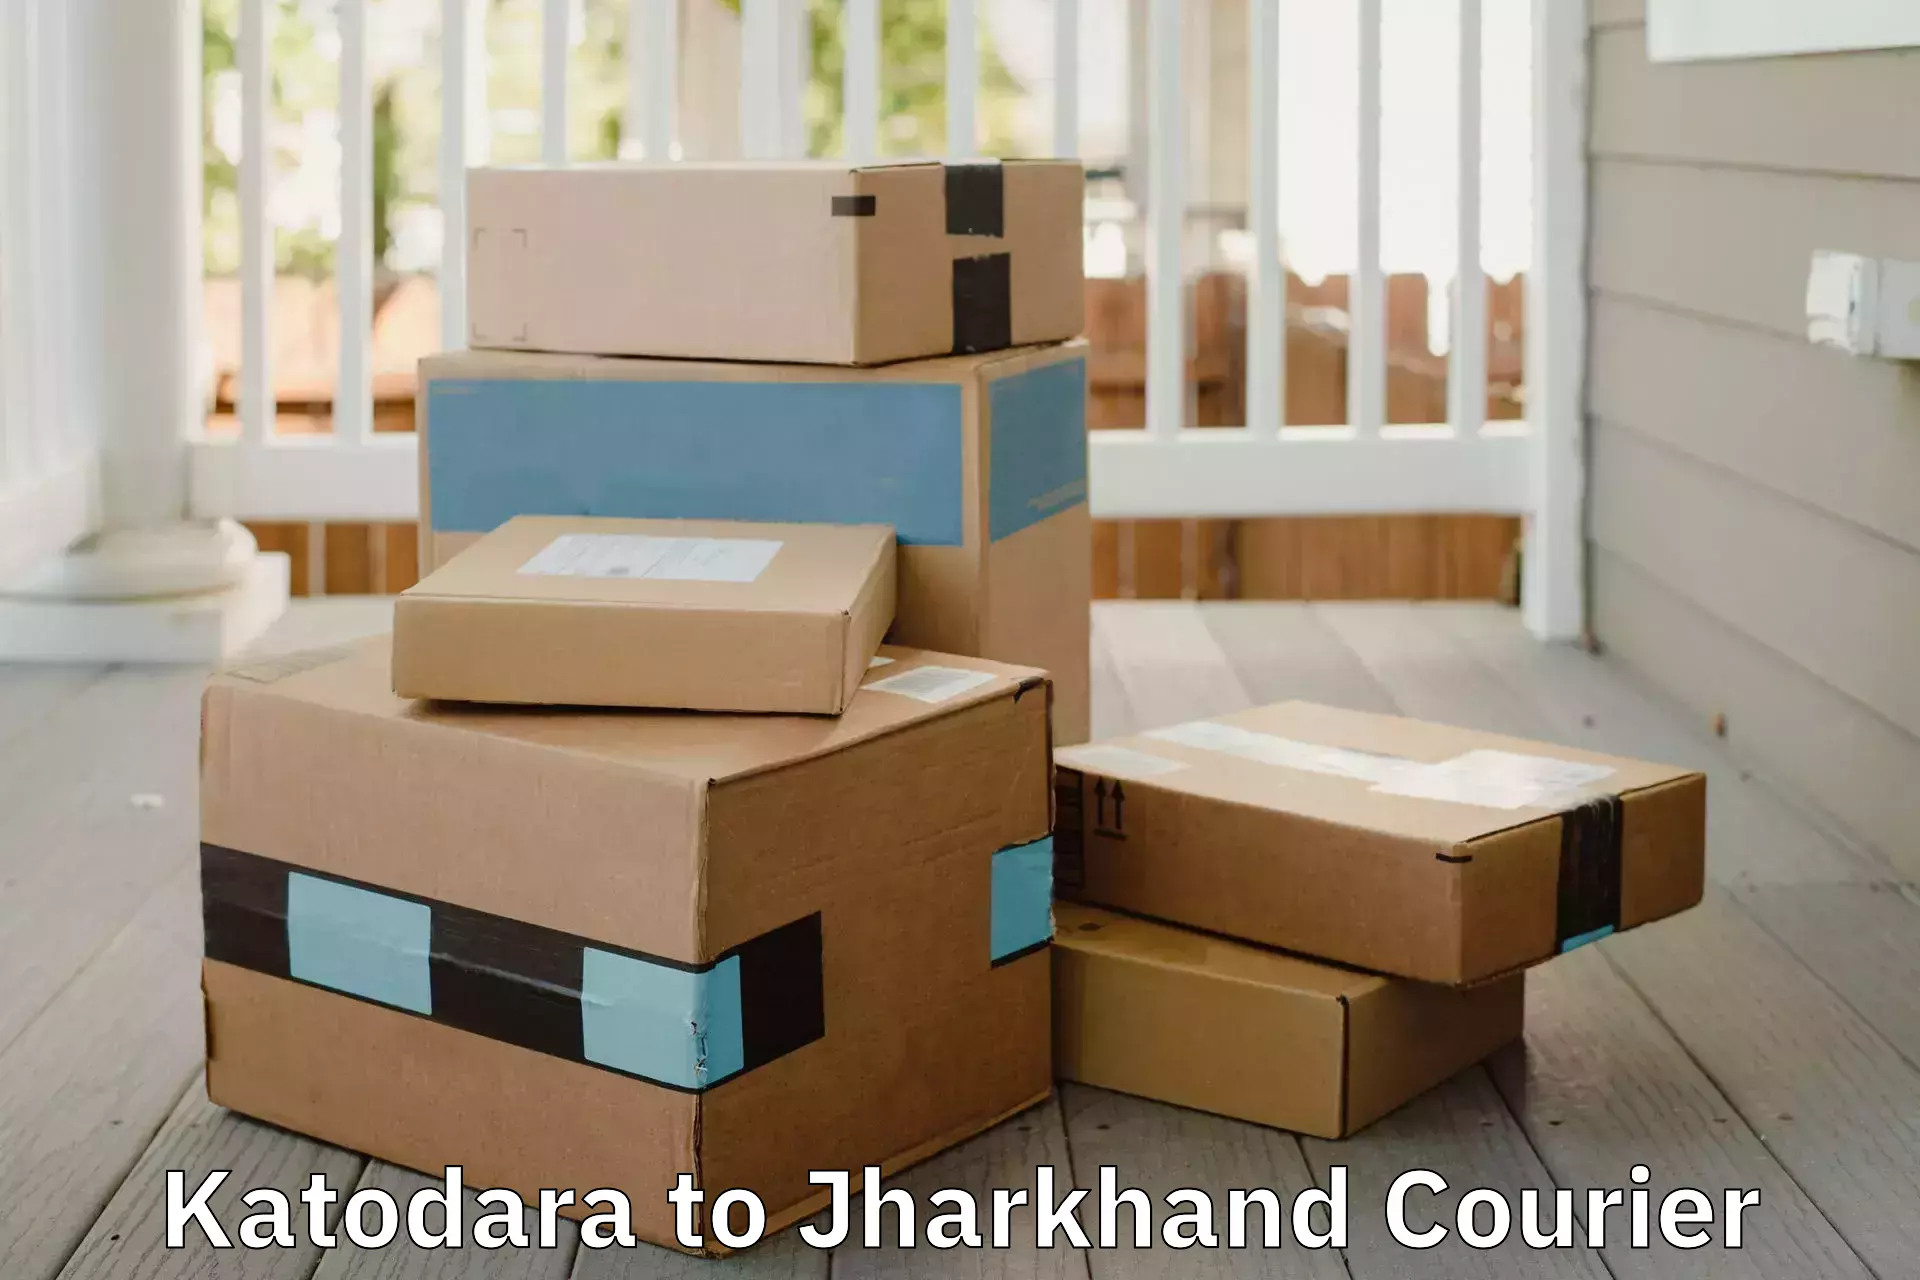 Efficient moving company Katodara to Jamshedpur